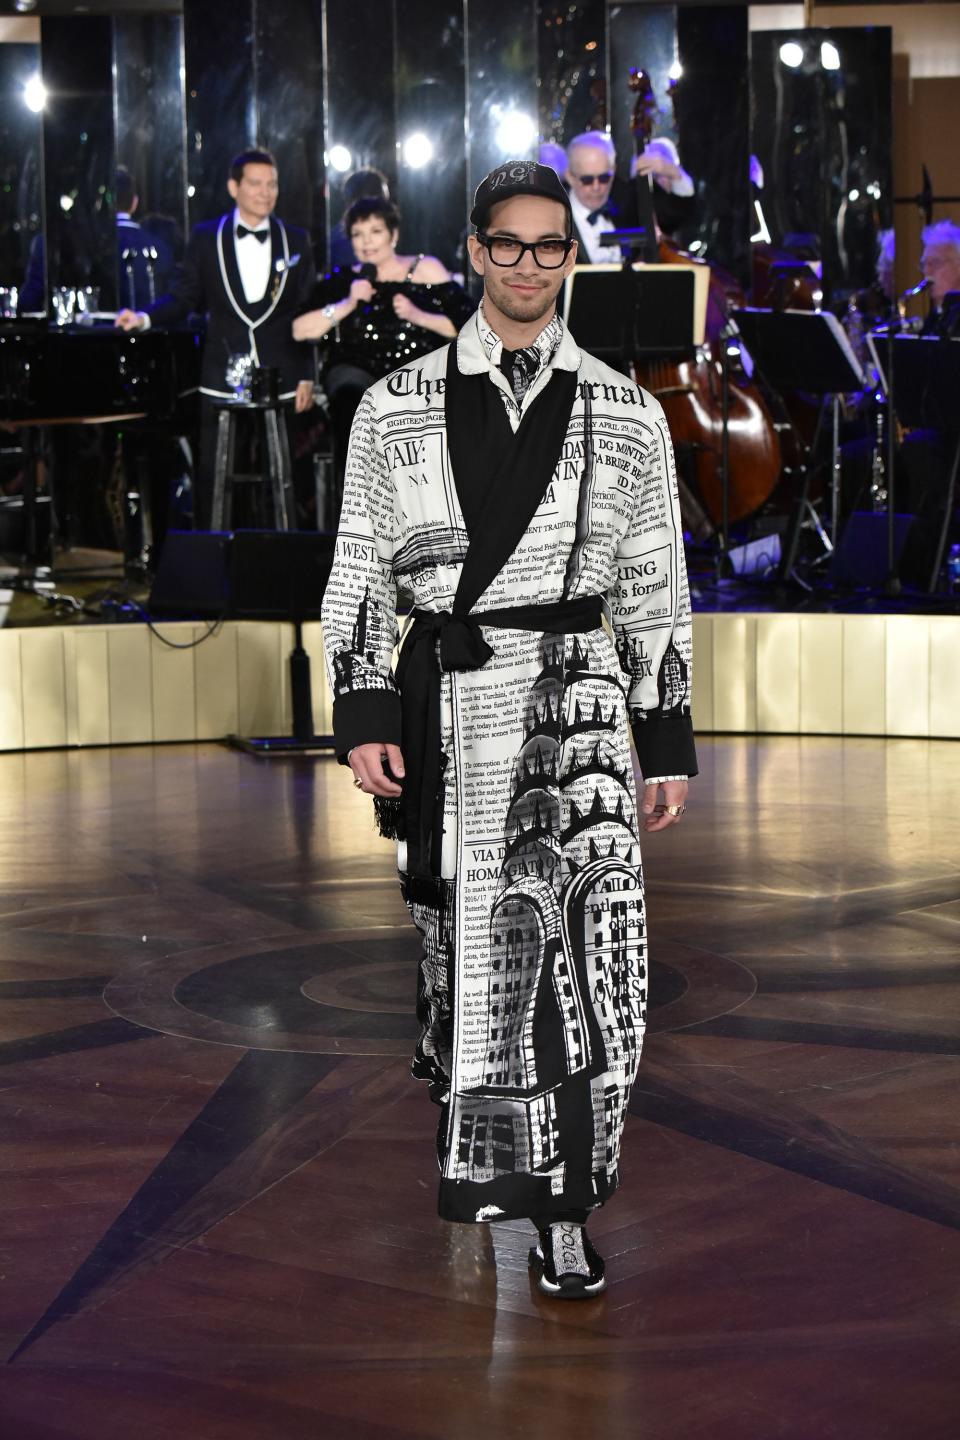 Dolce & Gabbana presented their Alta Sartoria menswear to a crowd that included Nick Jonas, Trevor Noah, and Steve Harvey.